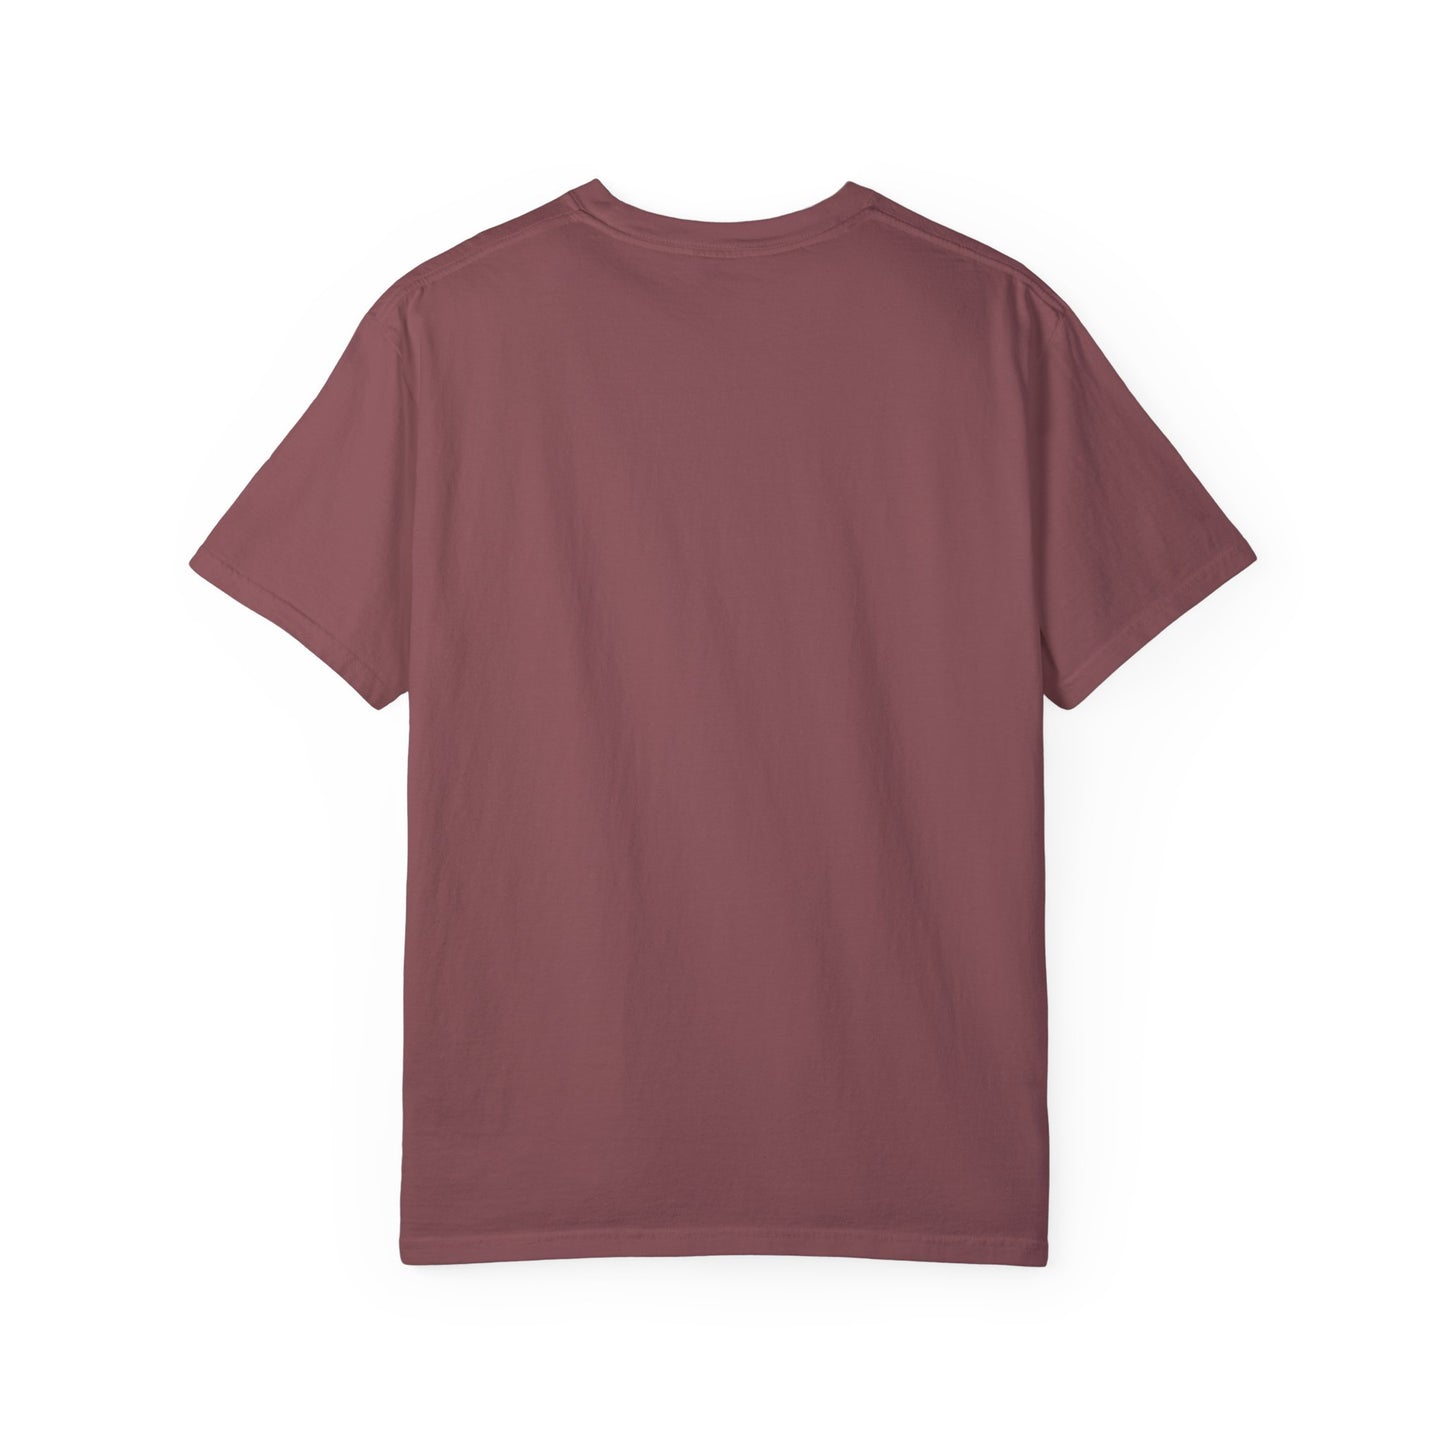 Caterwaul - Unisex Garment-Dyed T-shirt